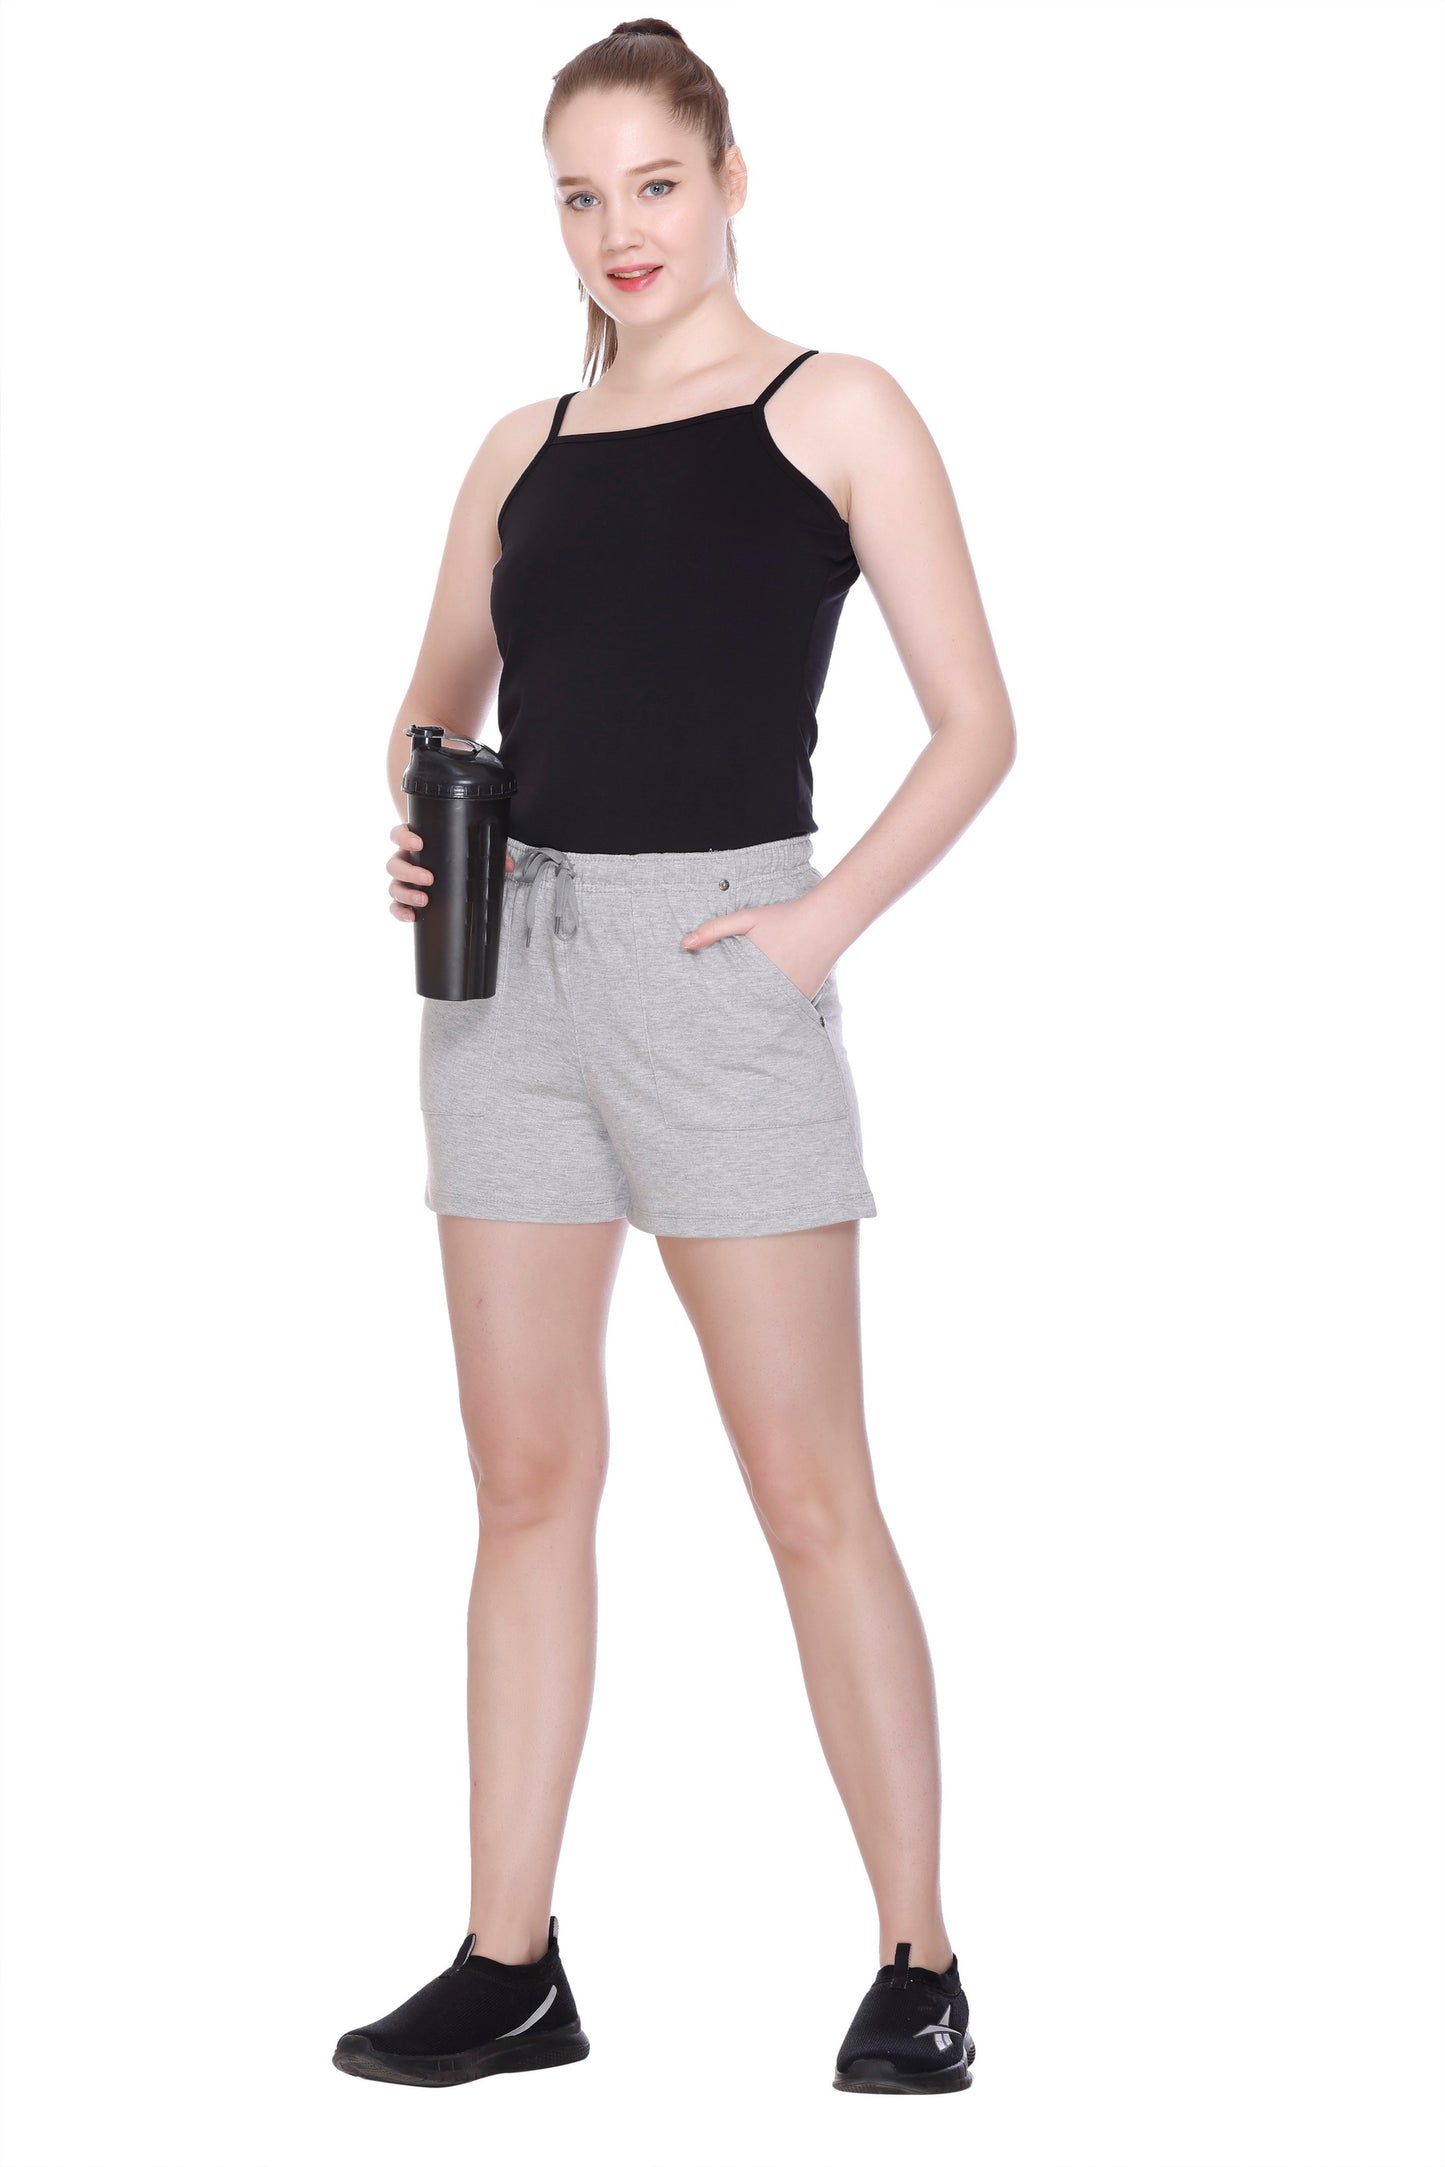 Cotton Shorts For Women Plain - Grey